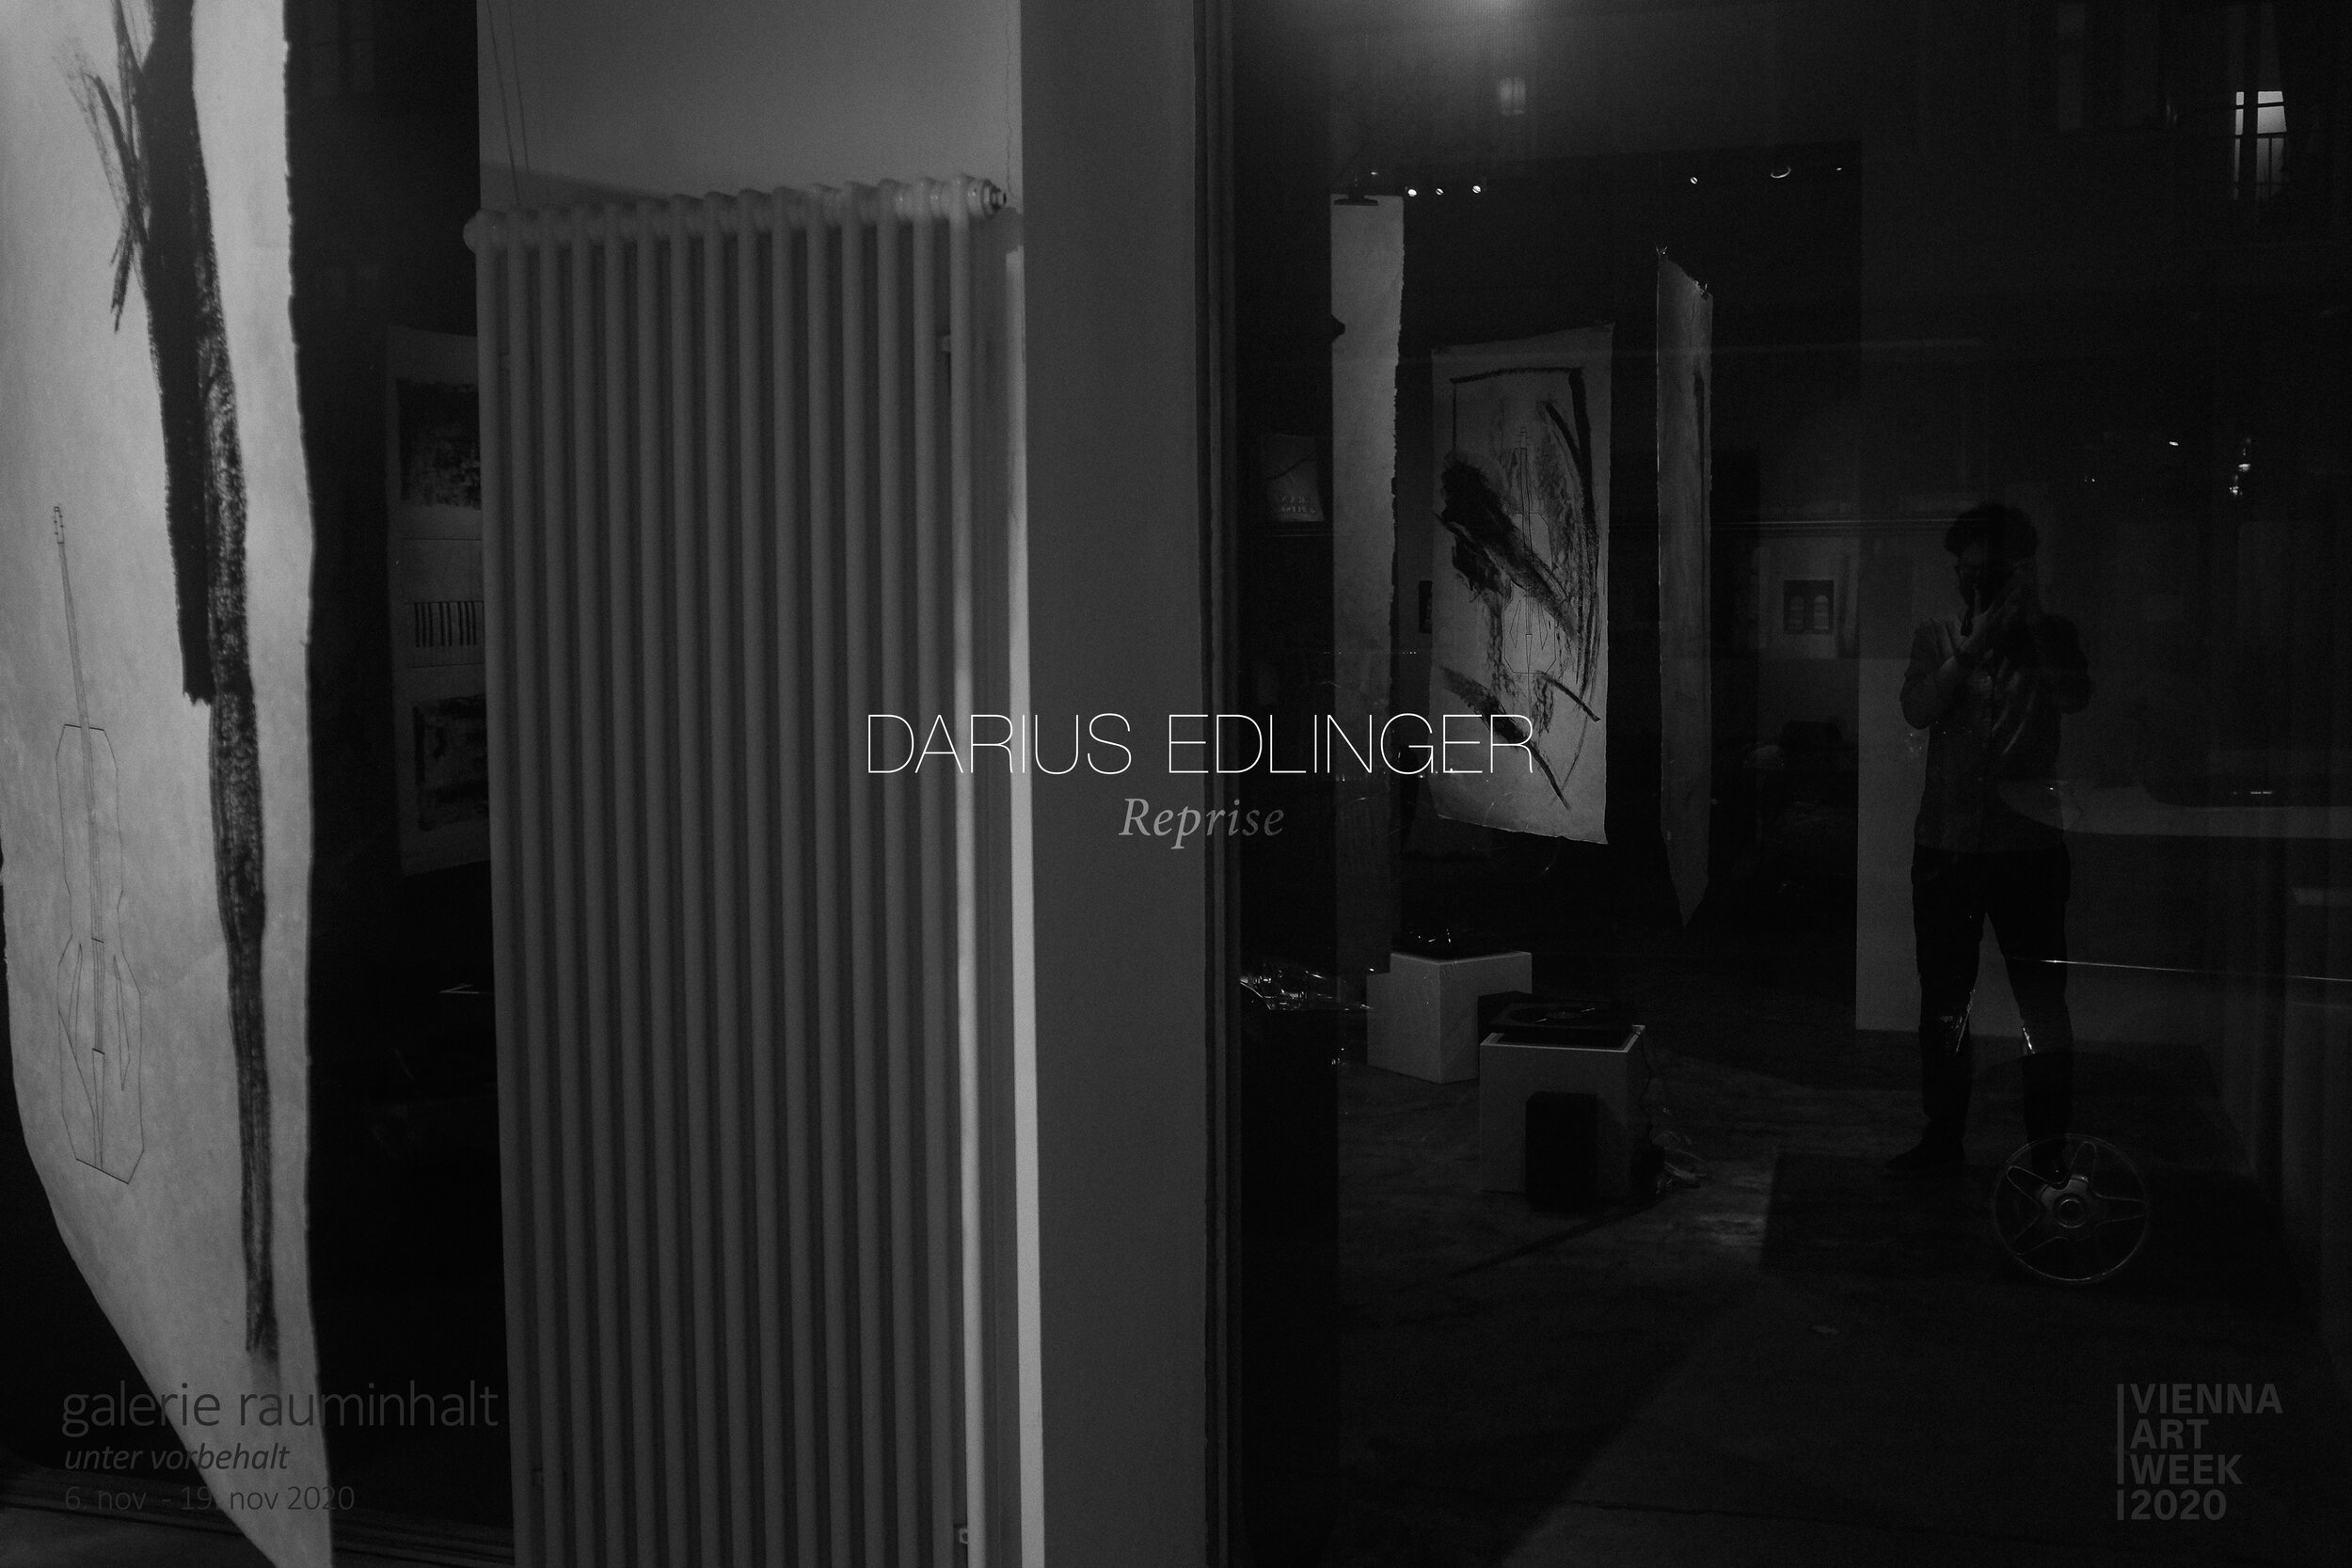 Darius Edlinger Reprise - Galerie Rauminhalt - Vienna Art Week 5